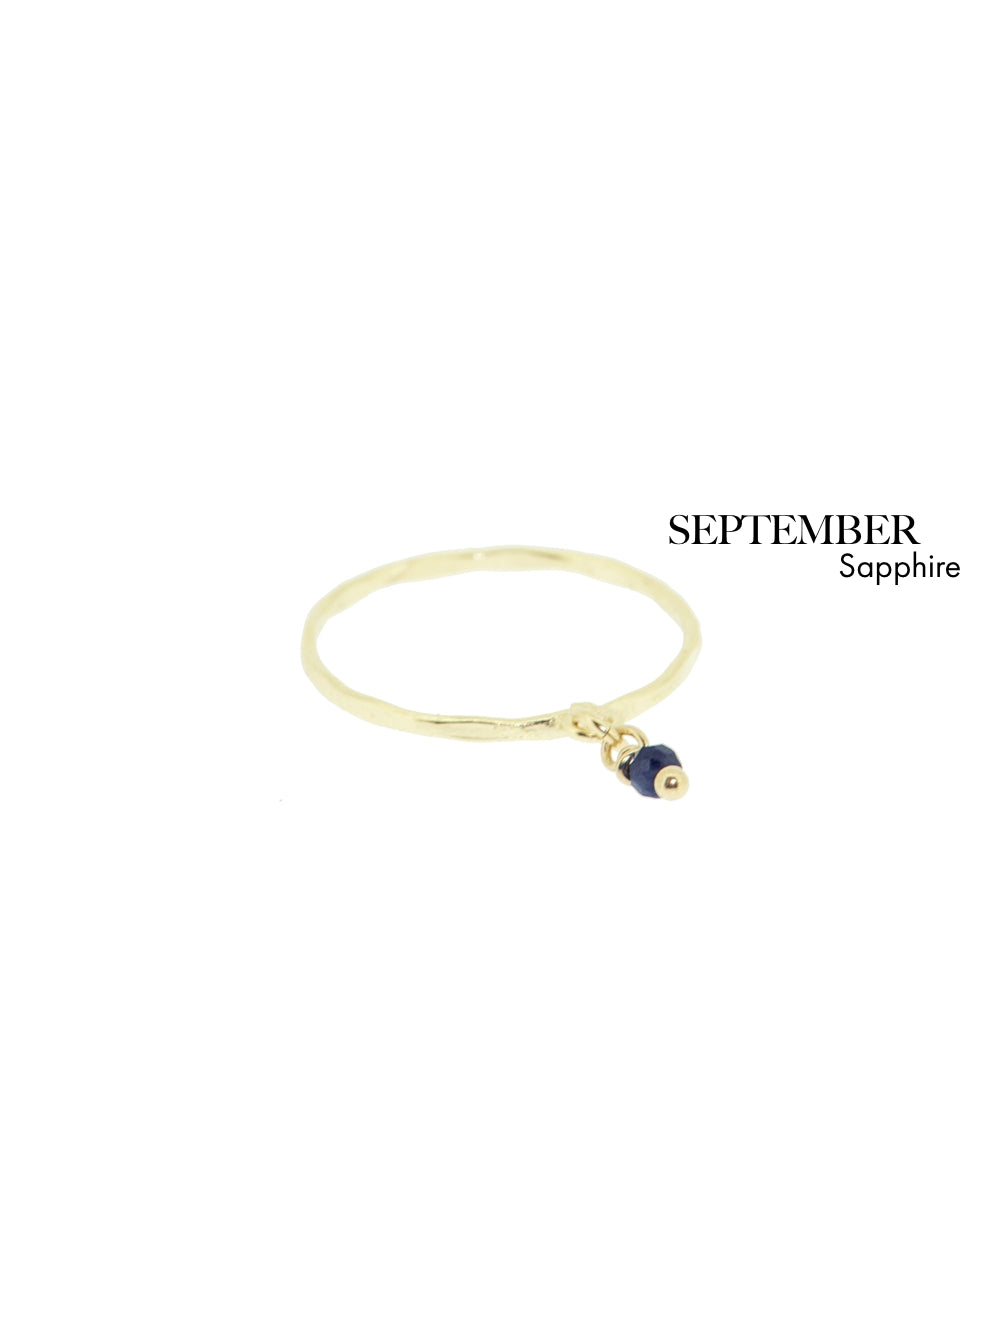 Birthstone ring September - Sapphire | 14K Gold Plated